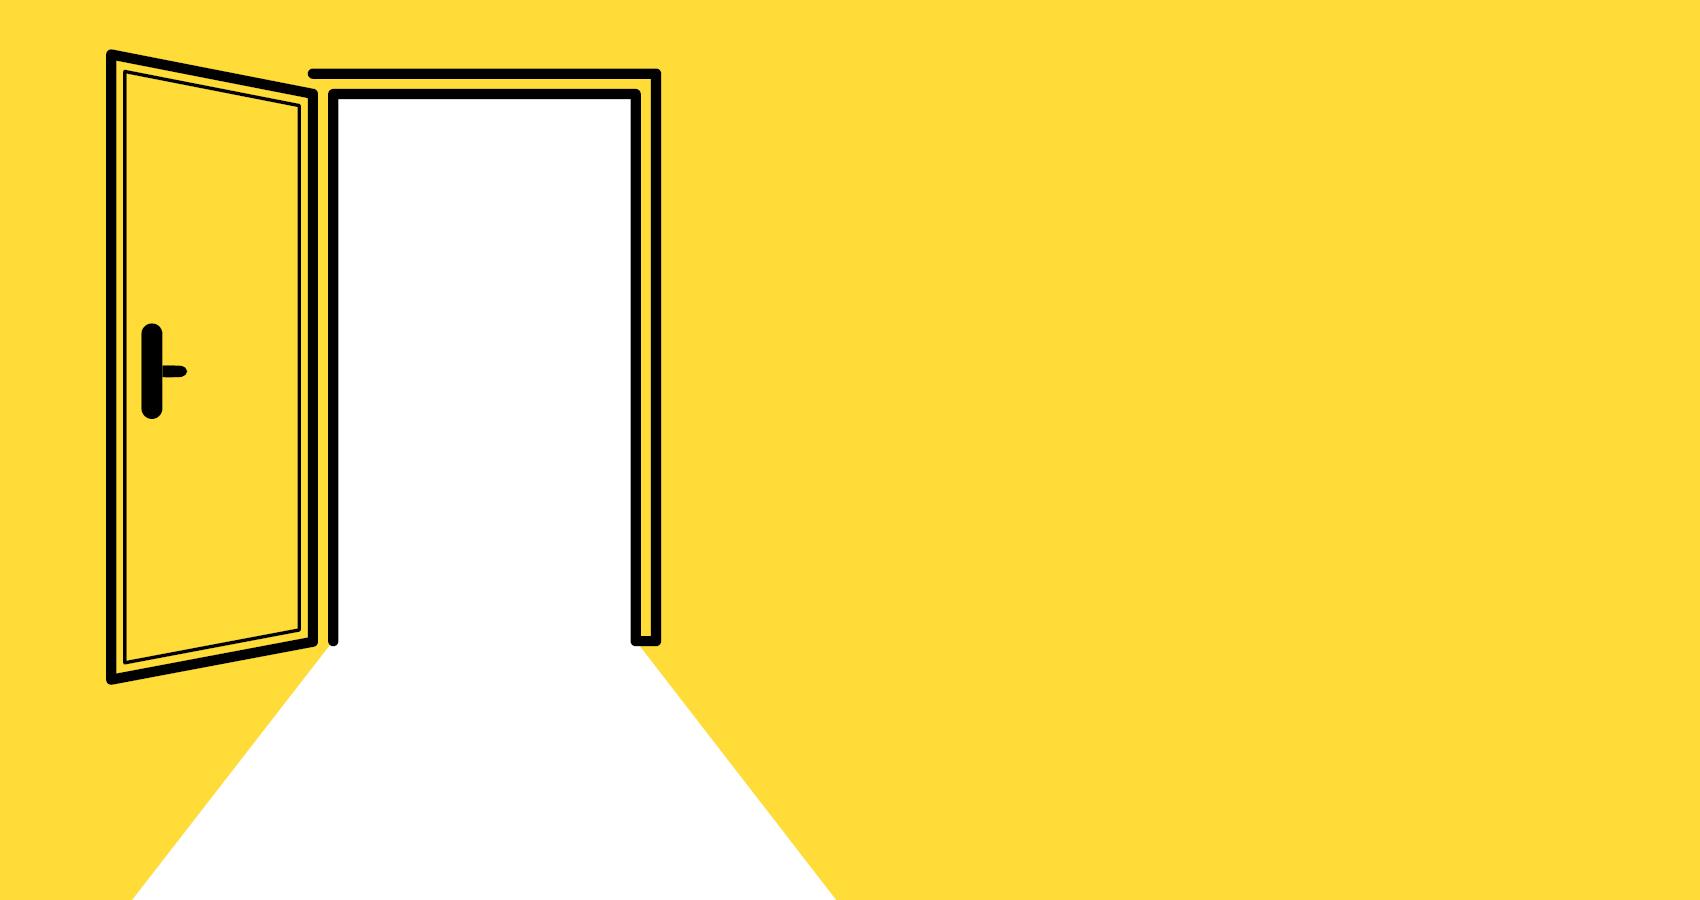 Yellow background with an open door